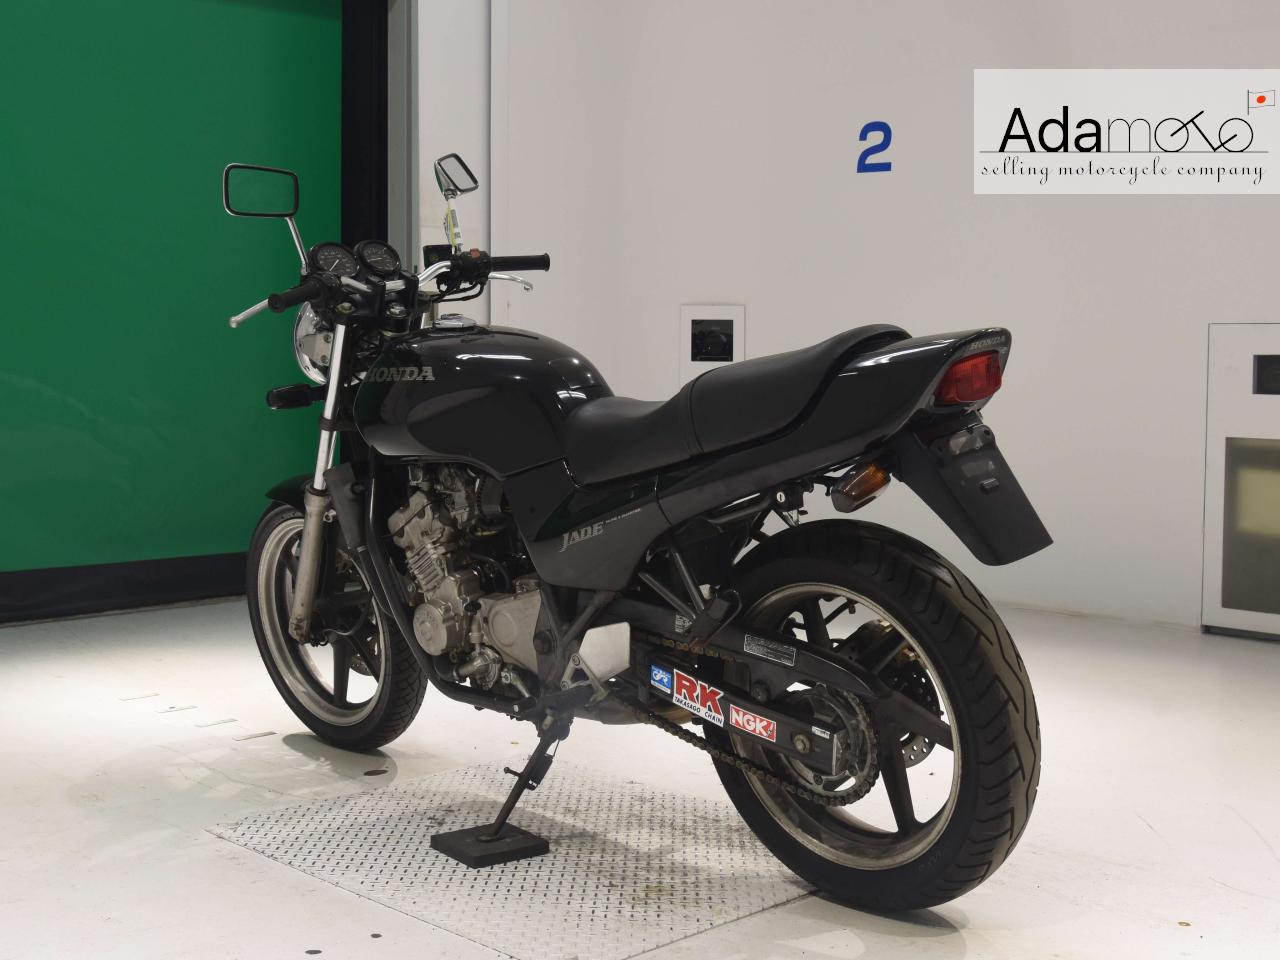 Honda JADE - Adamoto - Motorcycles from Japan